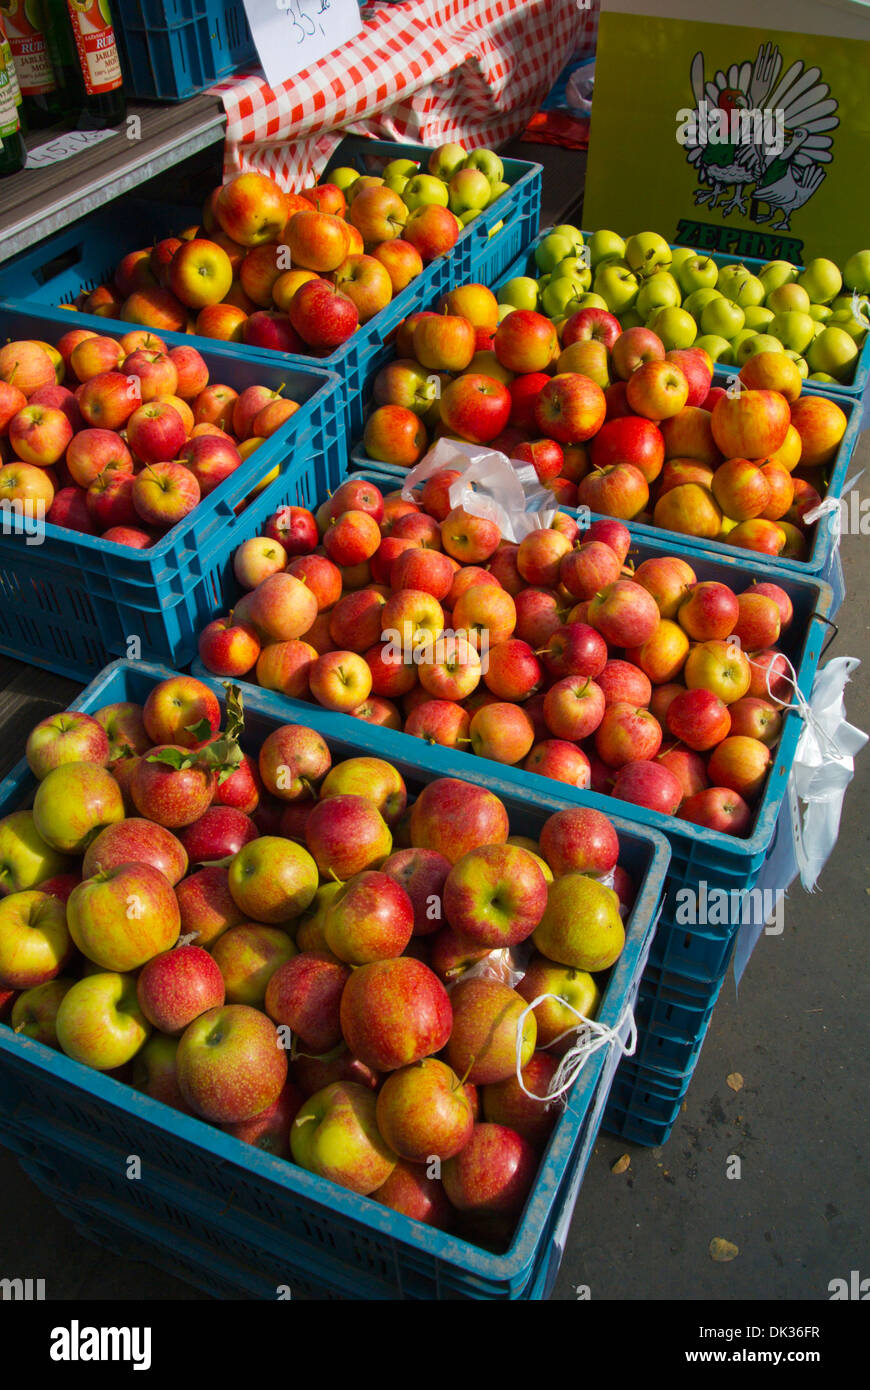 https://c8.alamy.com/comp/DK36FR/czech-apples-farmers-market-jiriho-z-podebrad-square-zizkov-district-DK36FR.jpg